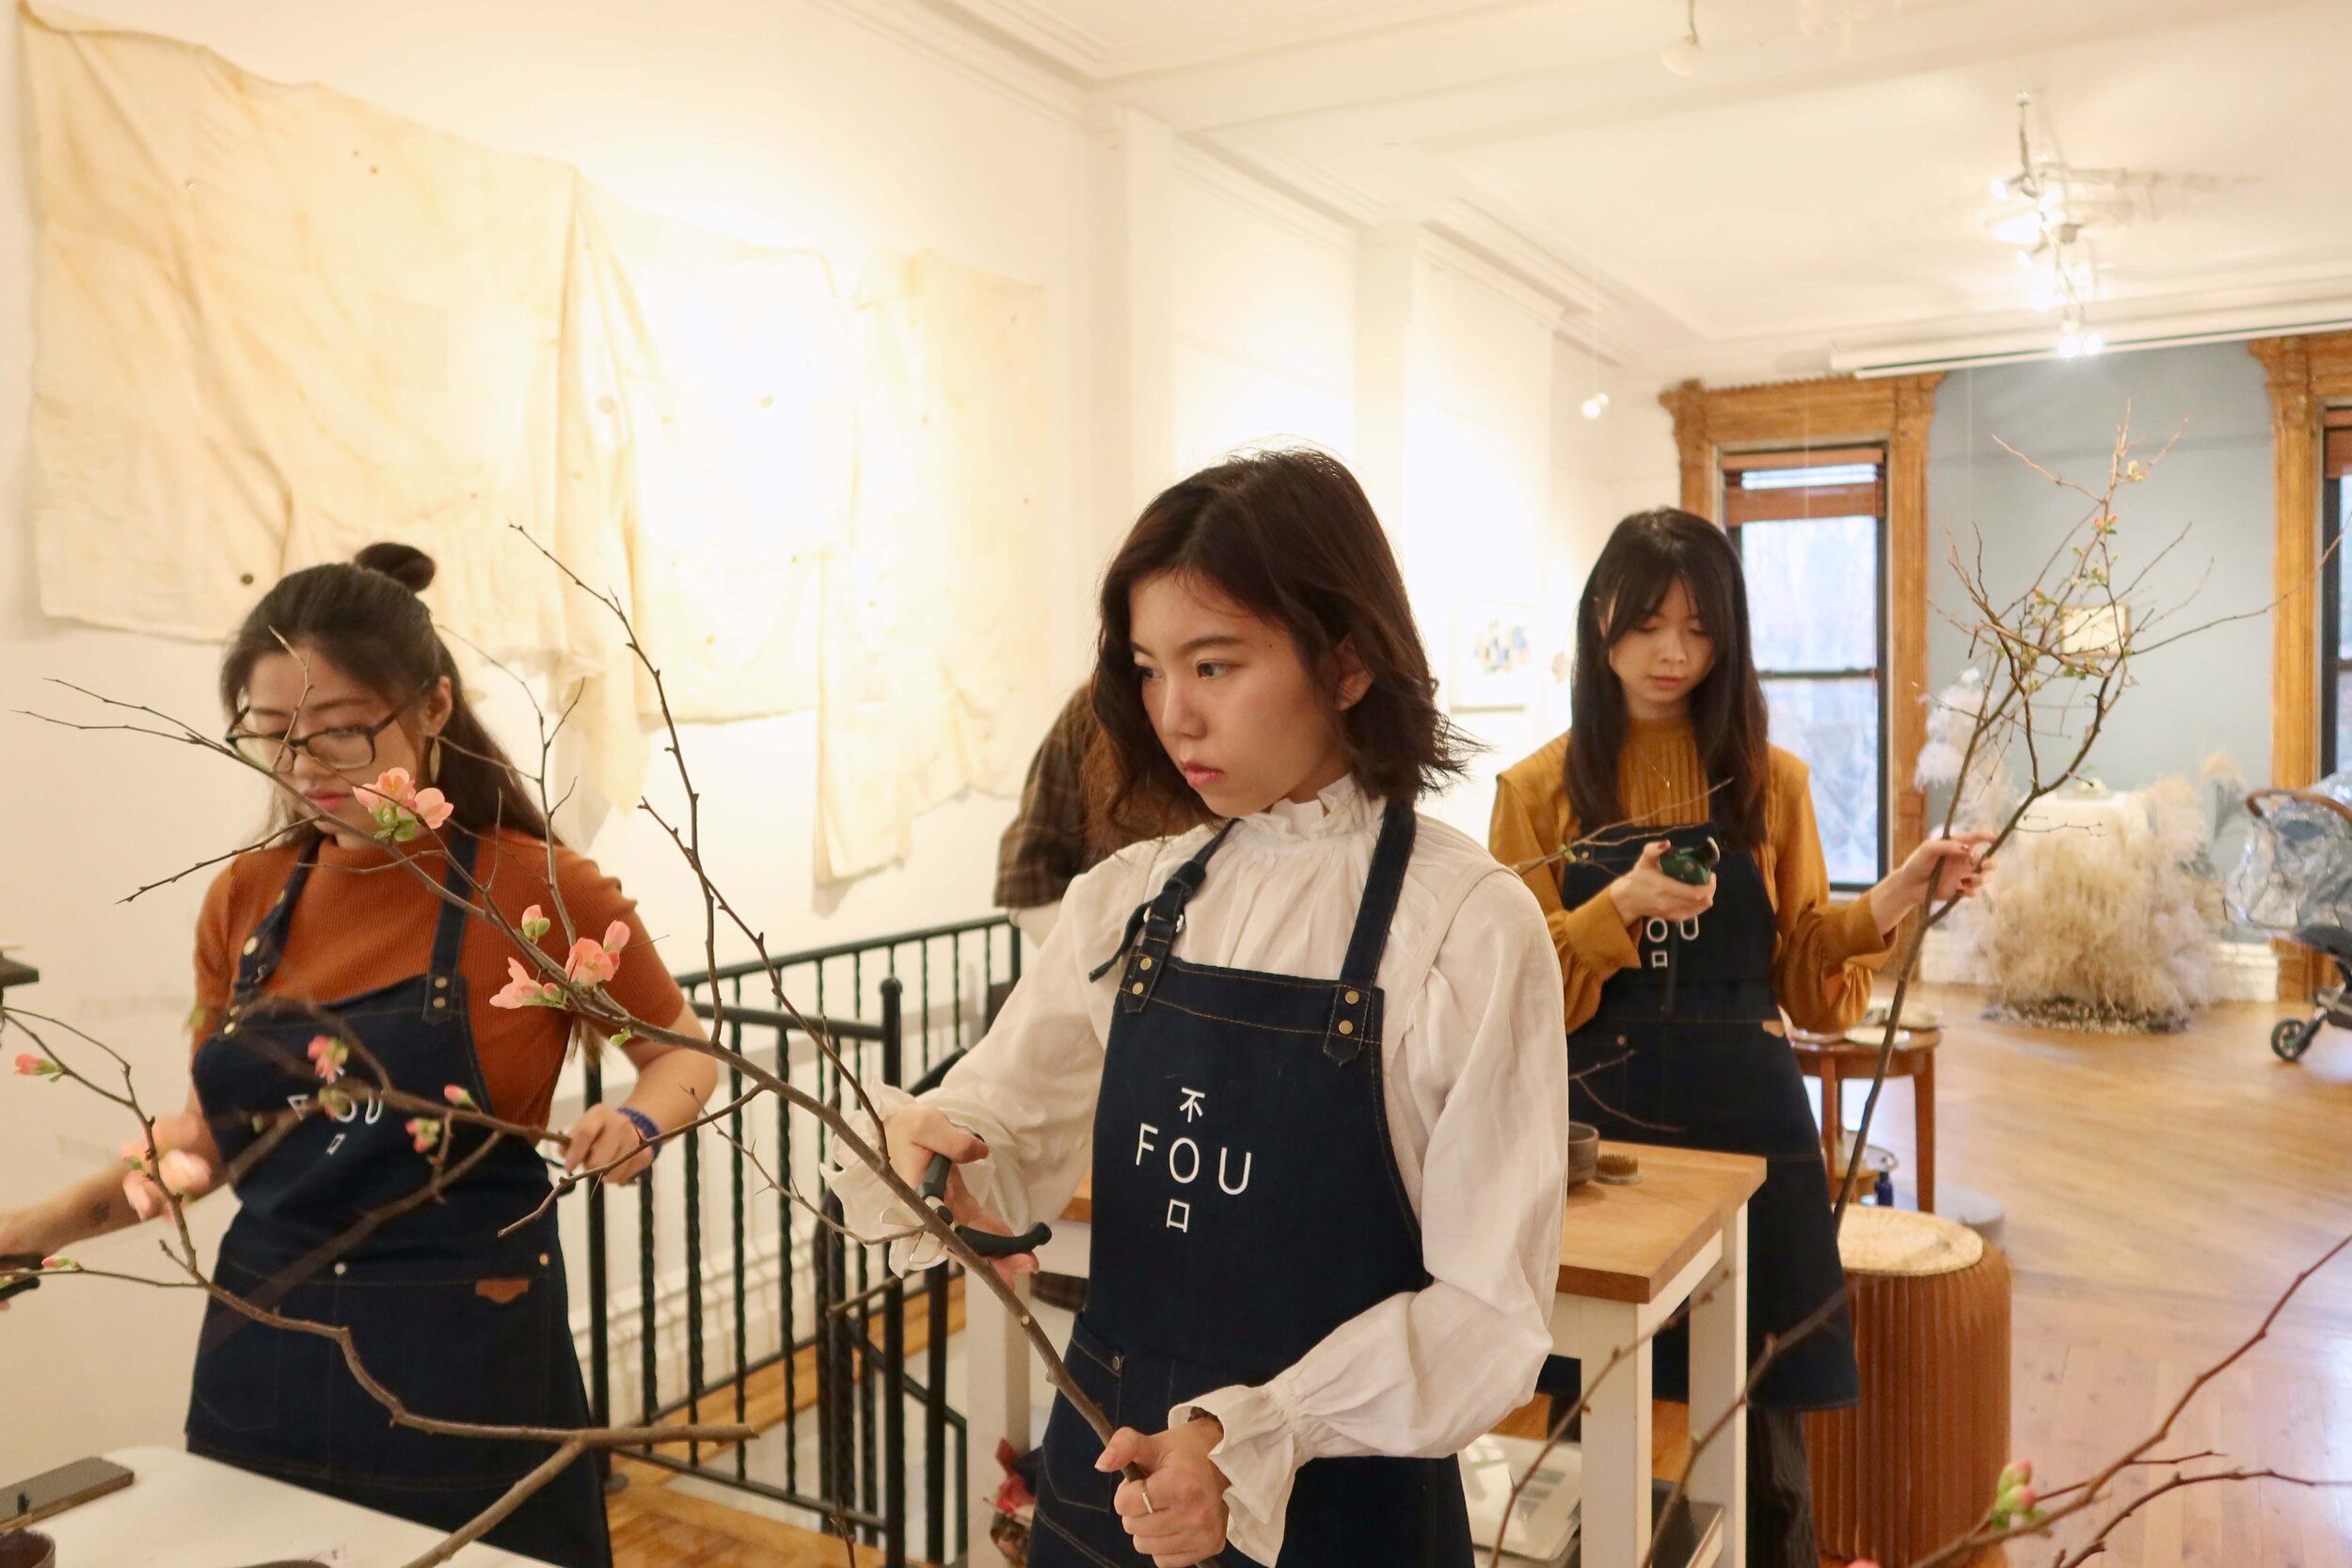   A Taste of Ikebana  at Fou Gallery (12.14.2019), photo by Jingxin Hu, courtesy Fou Gallery. 